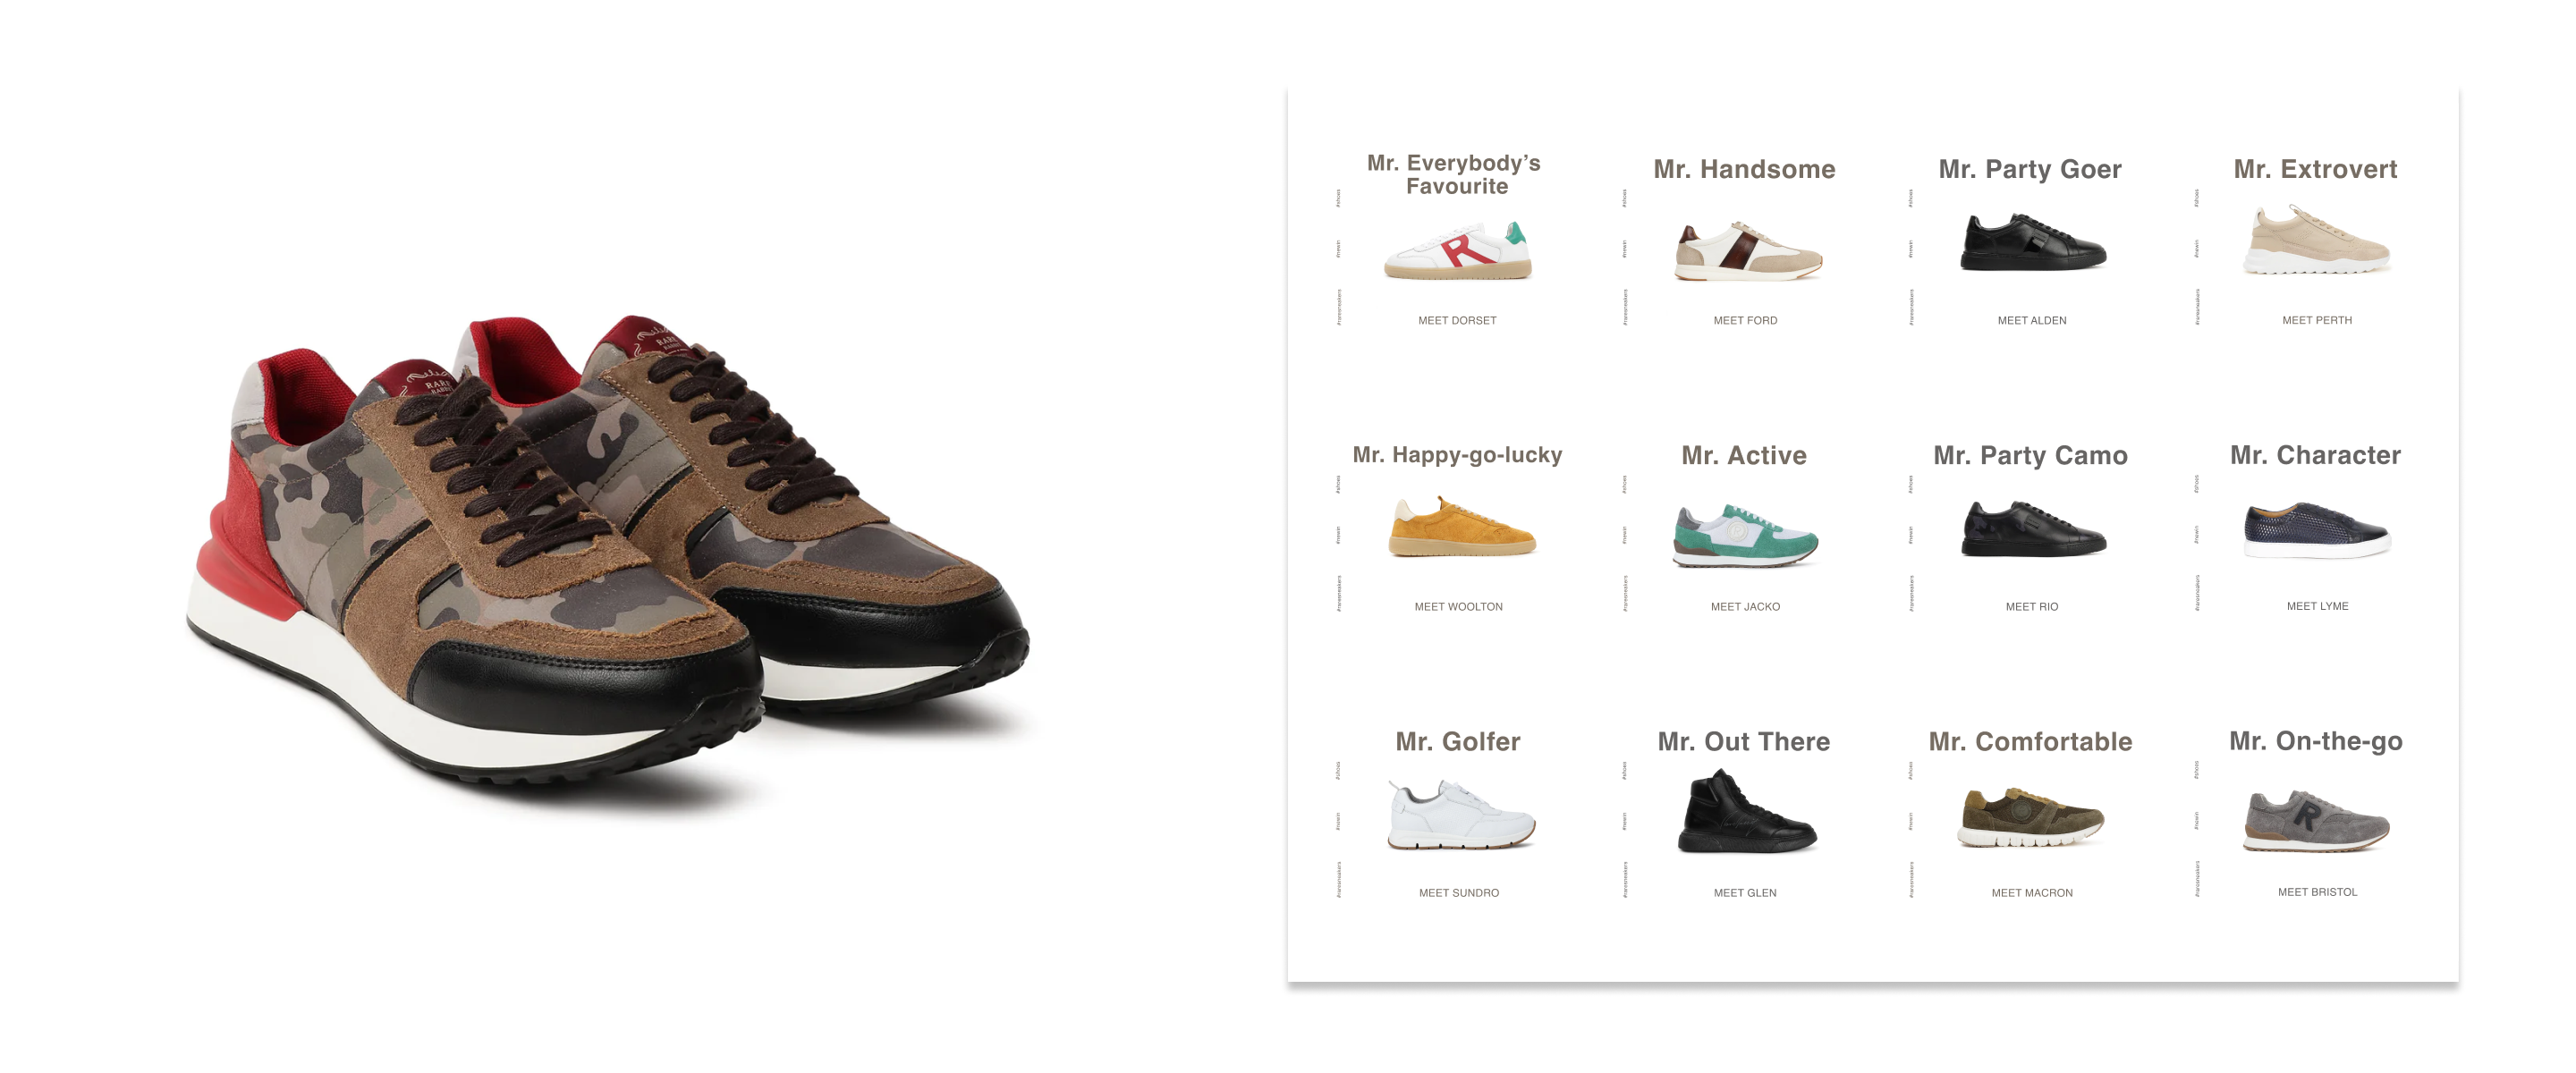 Where can I buy replica Louis Vuitton sneakers? - Quora